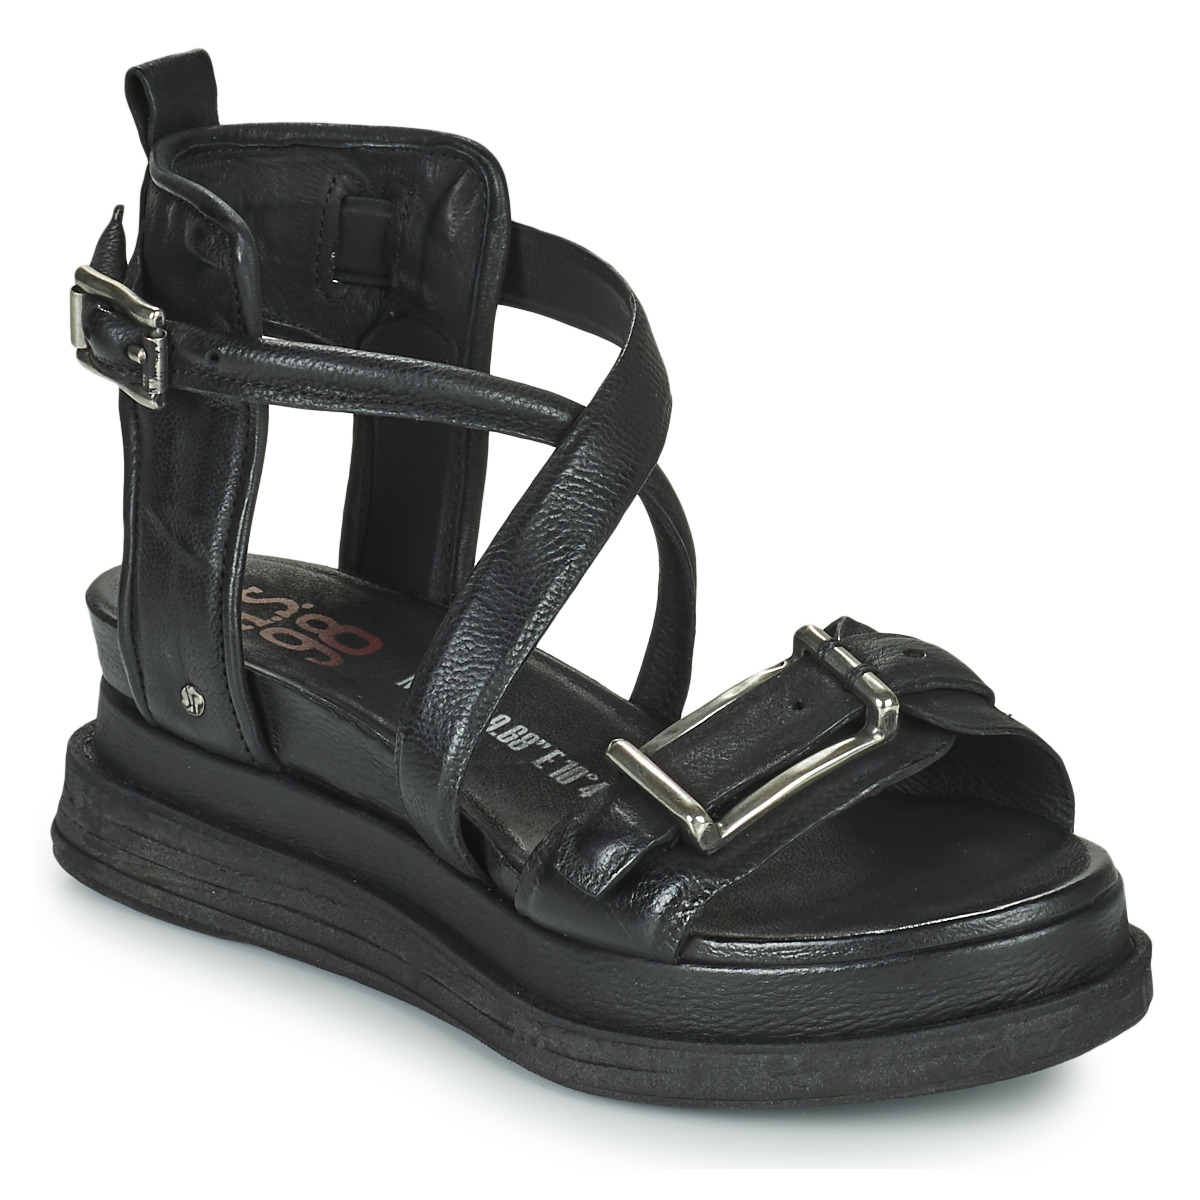 鞋子 女士 凉鞋 Airstep / A.S.98 LAGOS BUCKLE 黑色